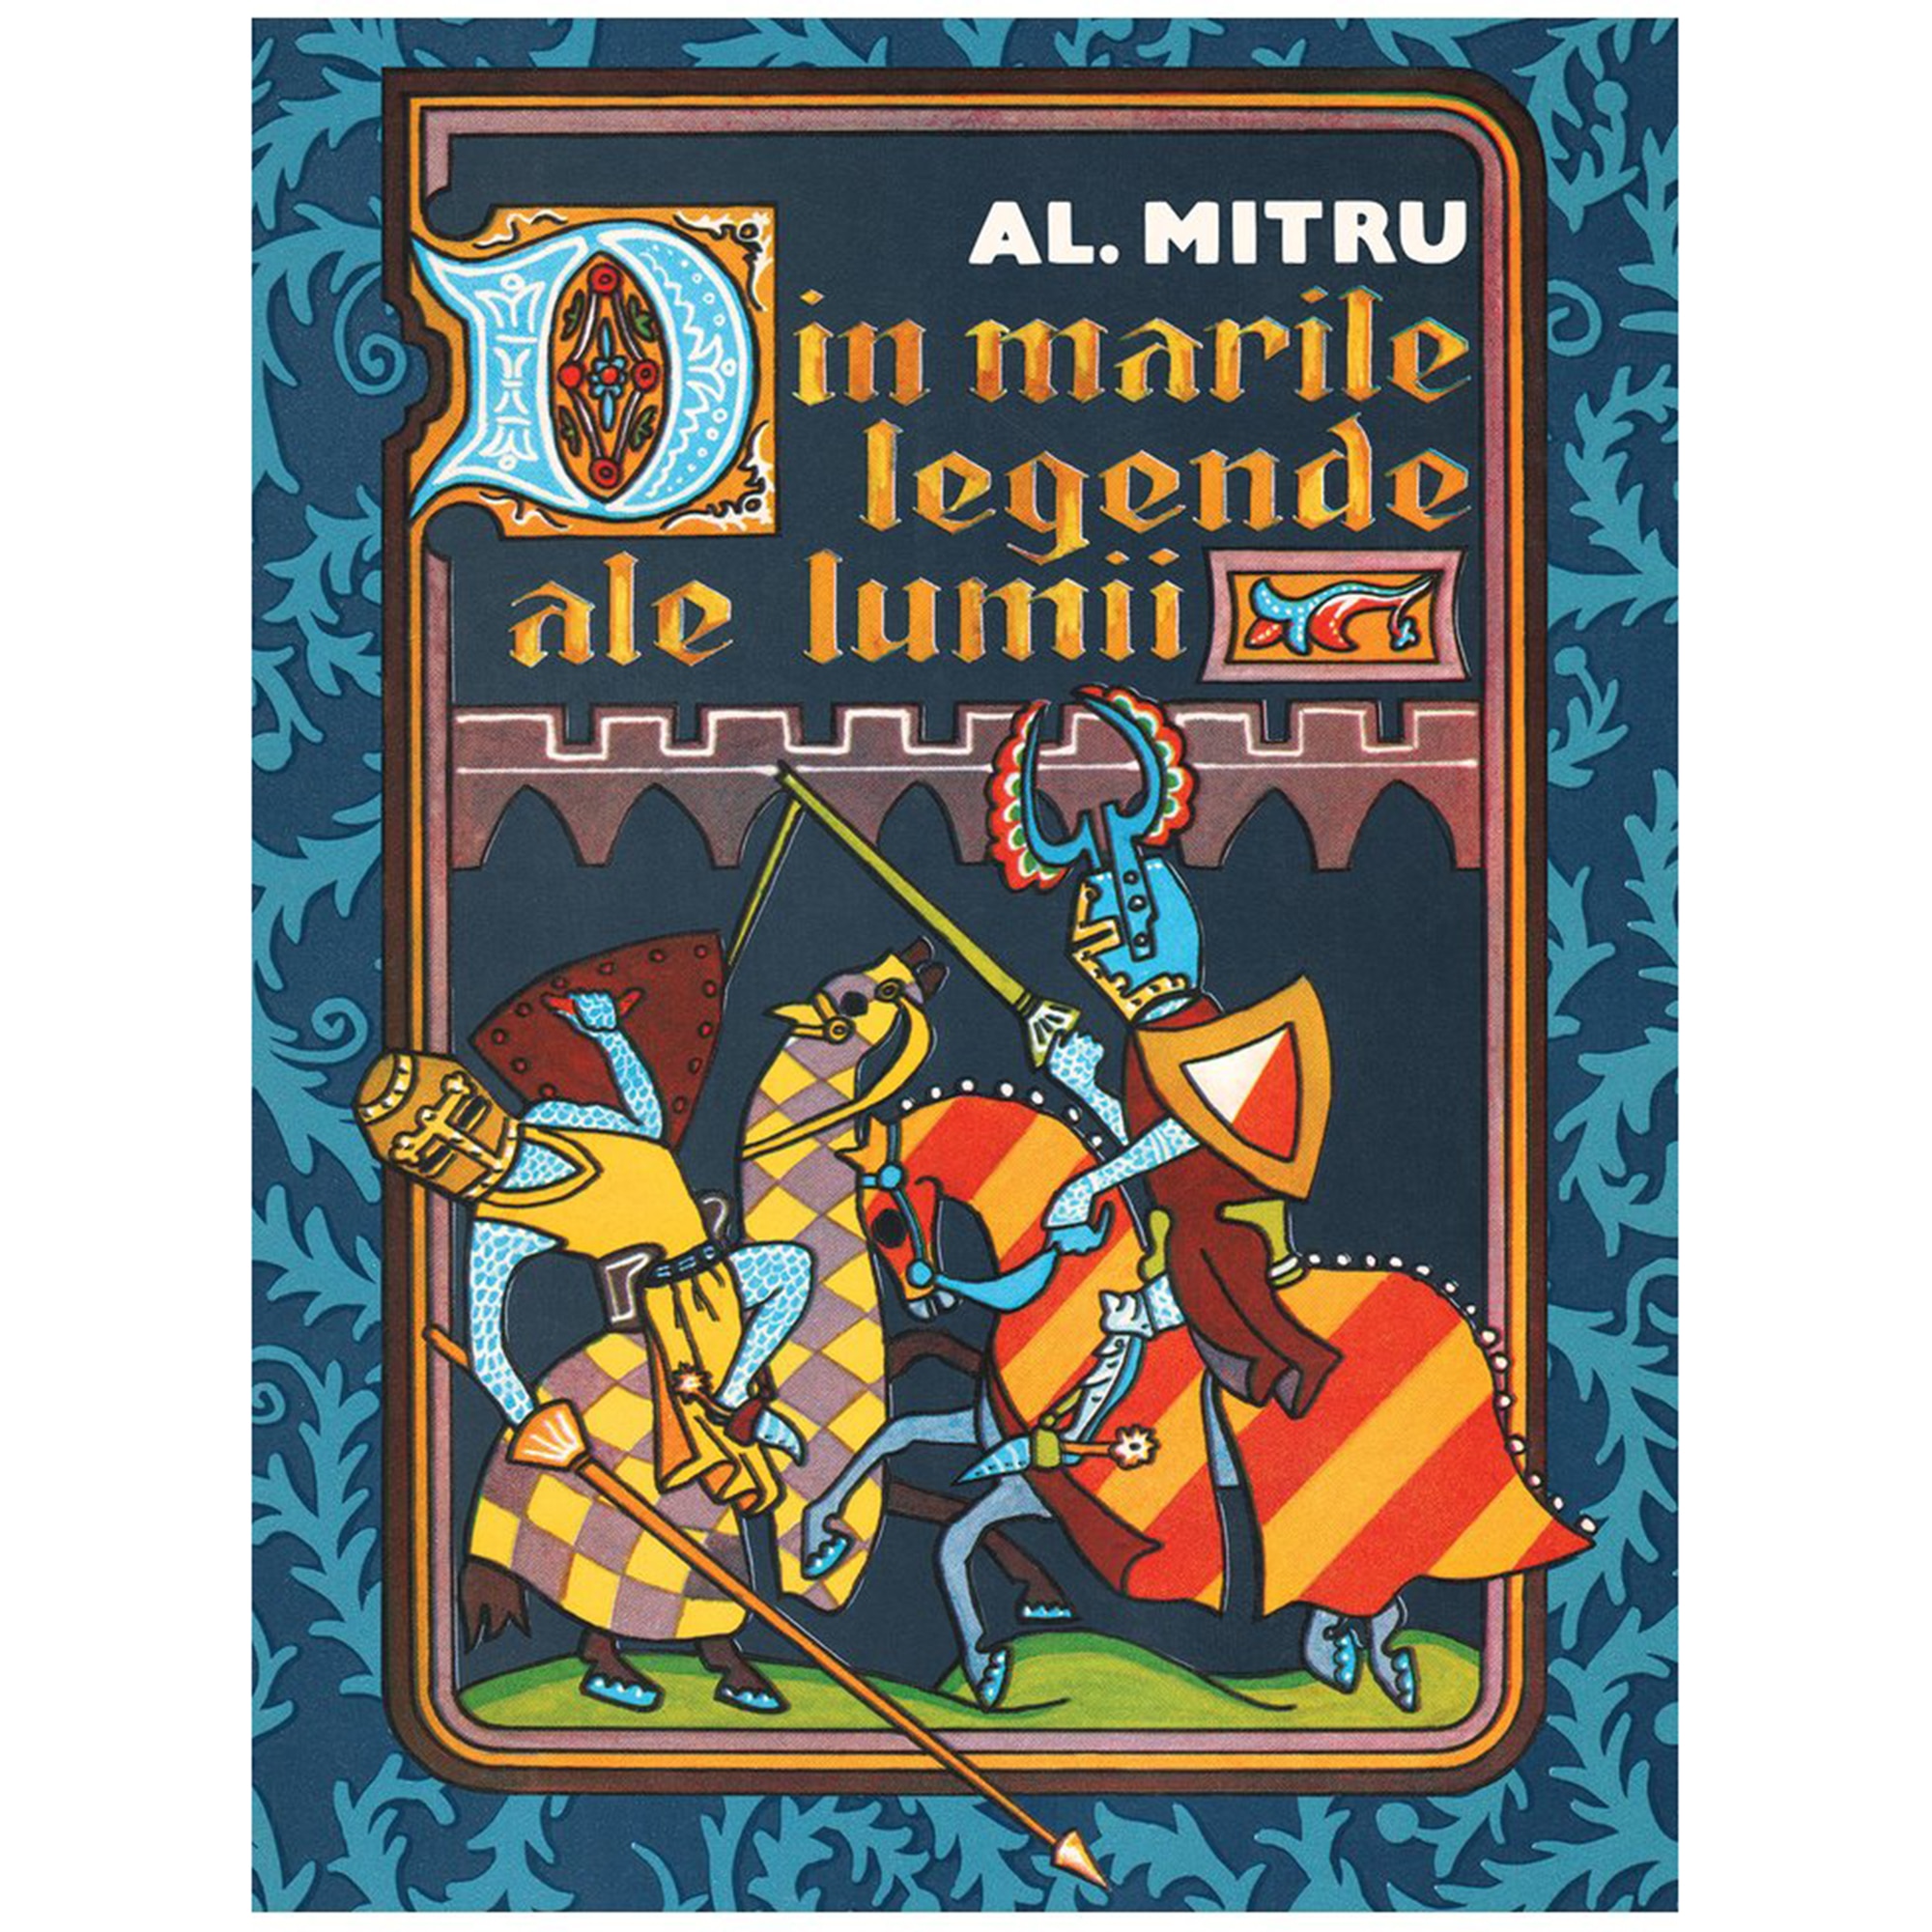 Din marile legende ale lumii | Al. Mitru Arthur poza bestsellers.ro